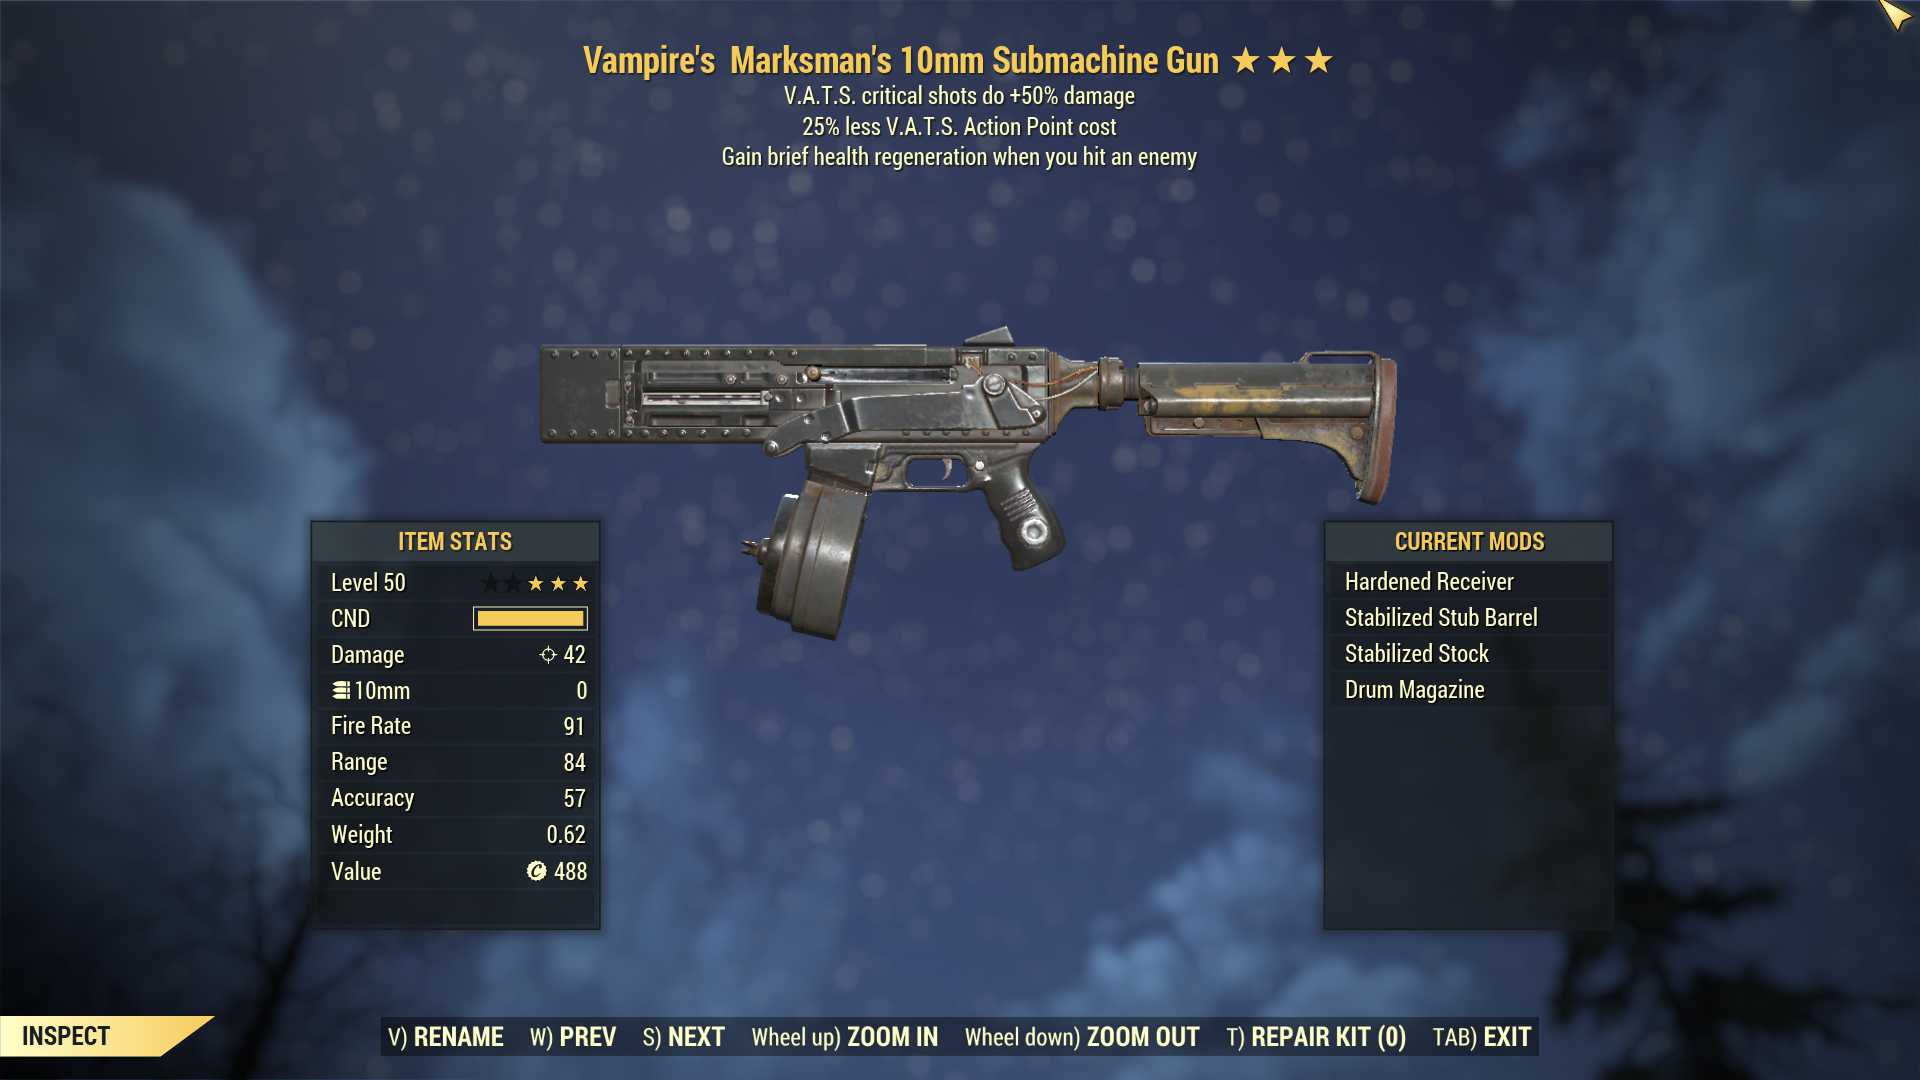 Vampire's 10mm Submachine Gun (+50% critical damage, 25% less VATS AP cost)